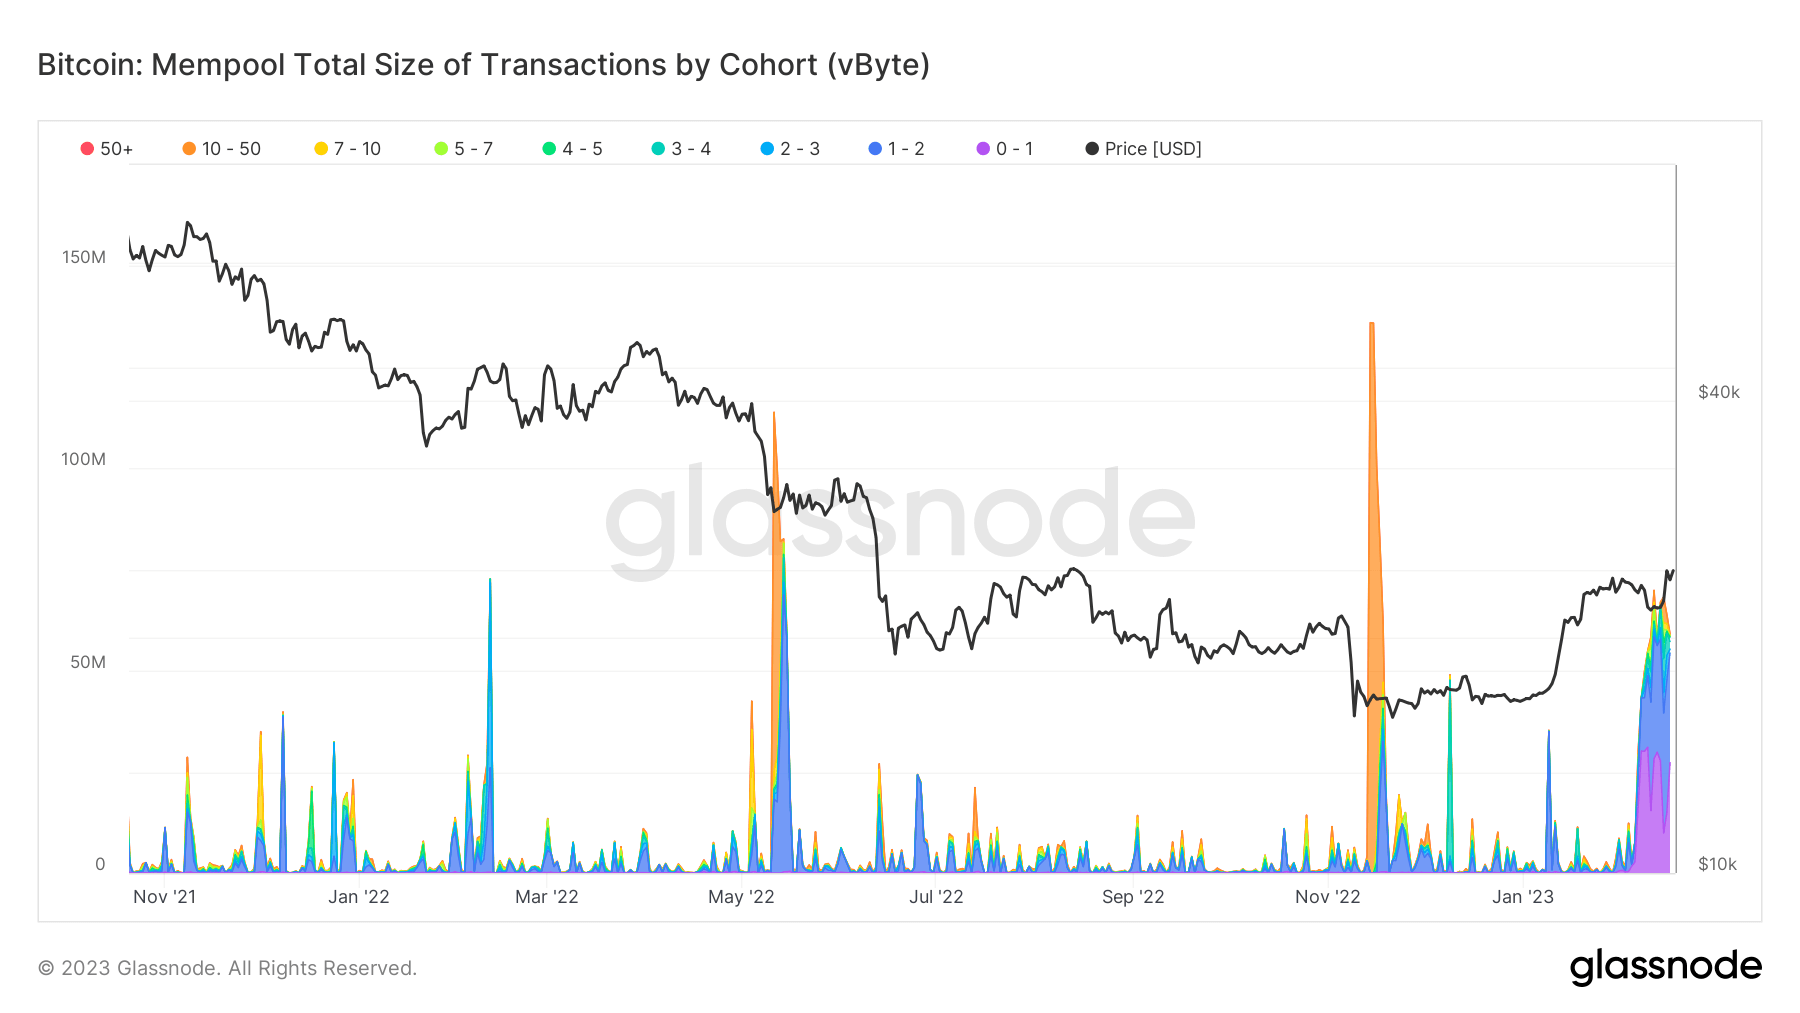 Total size of Bitcoin mempool transactions per cohort